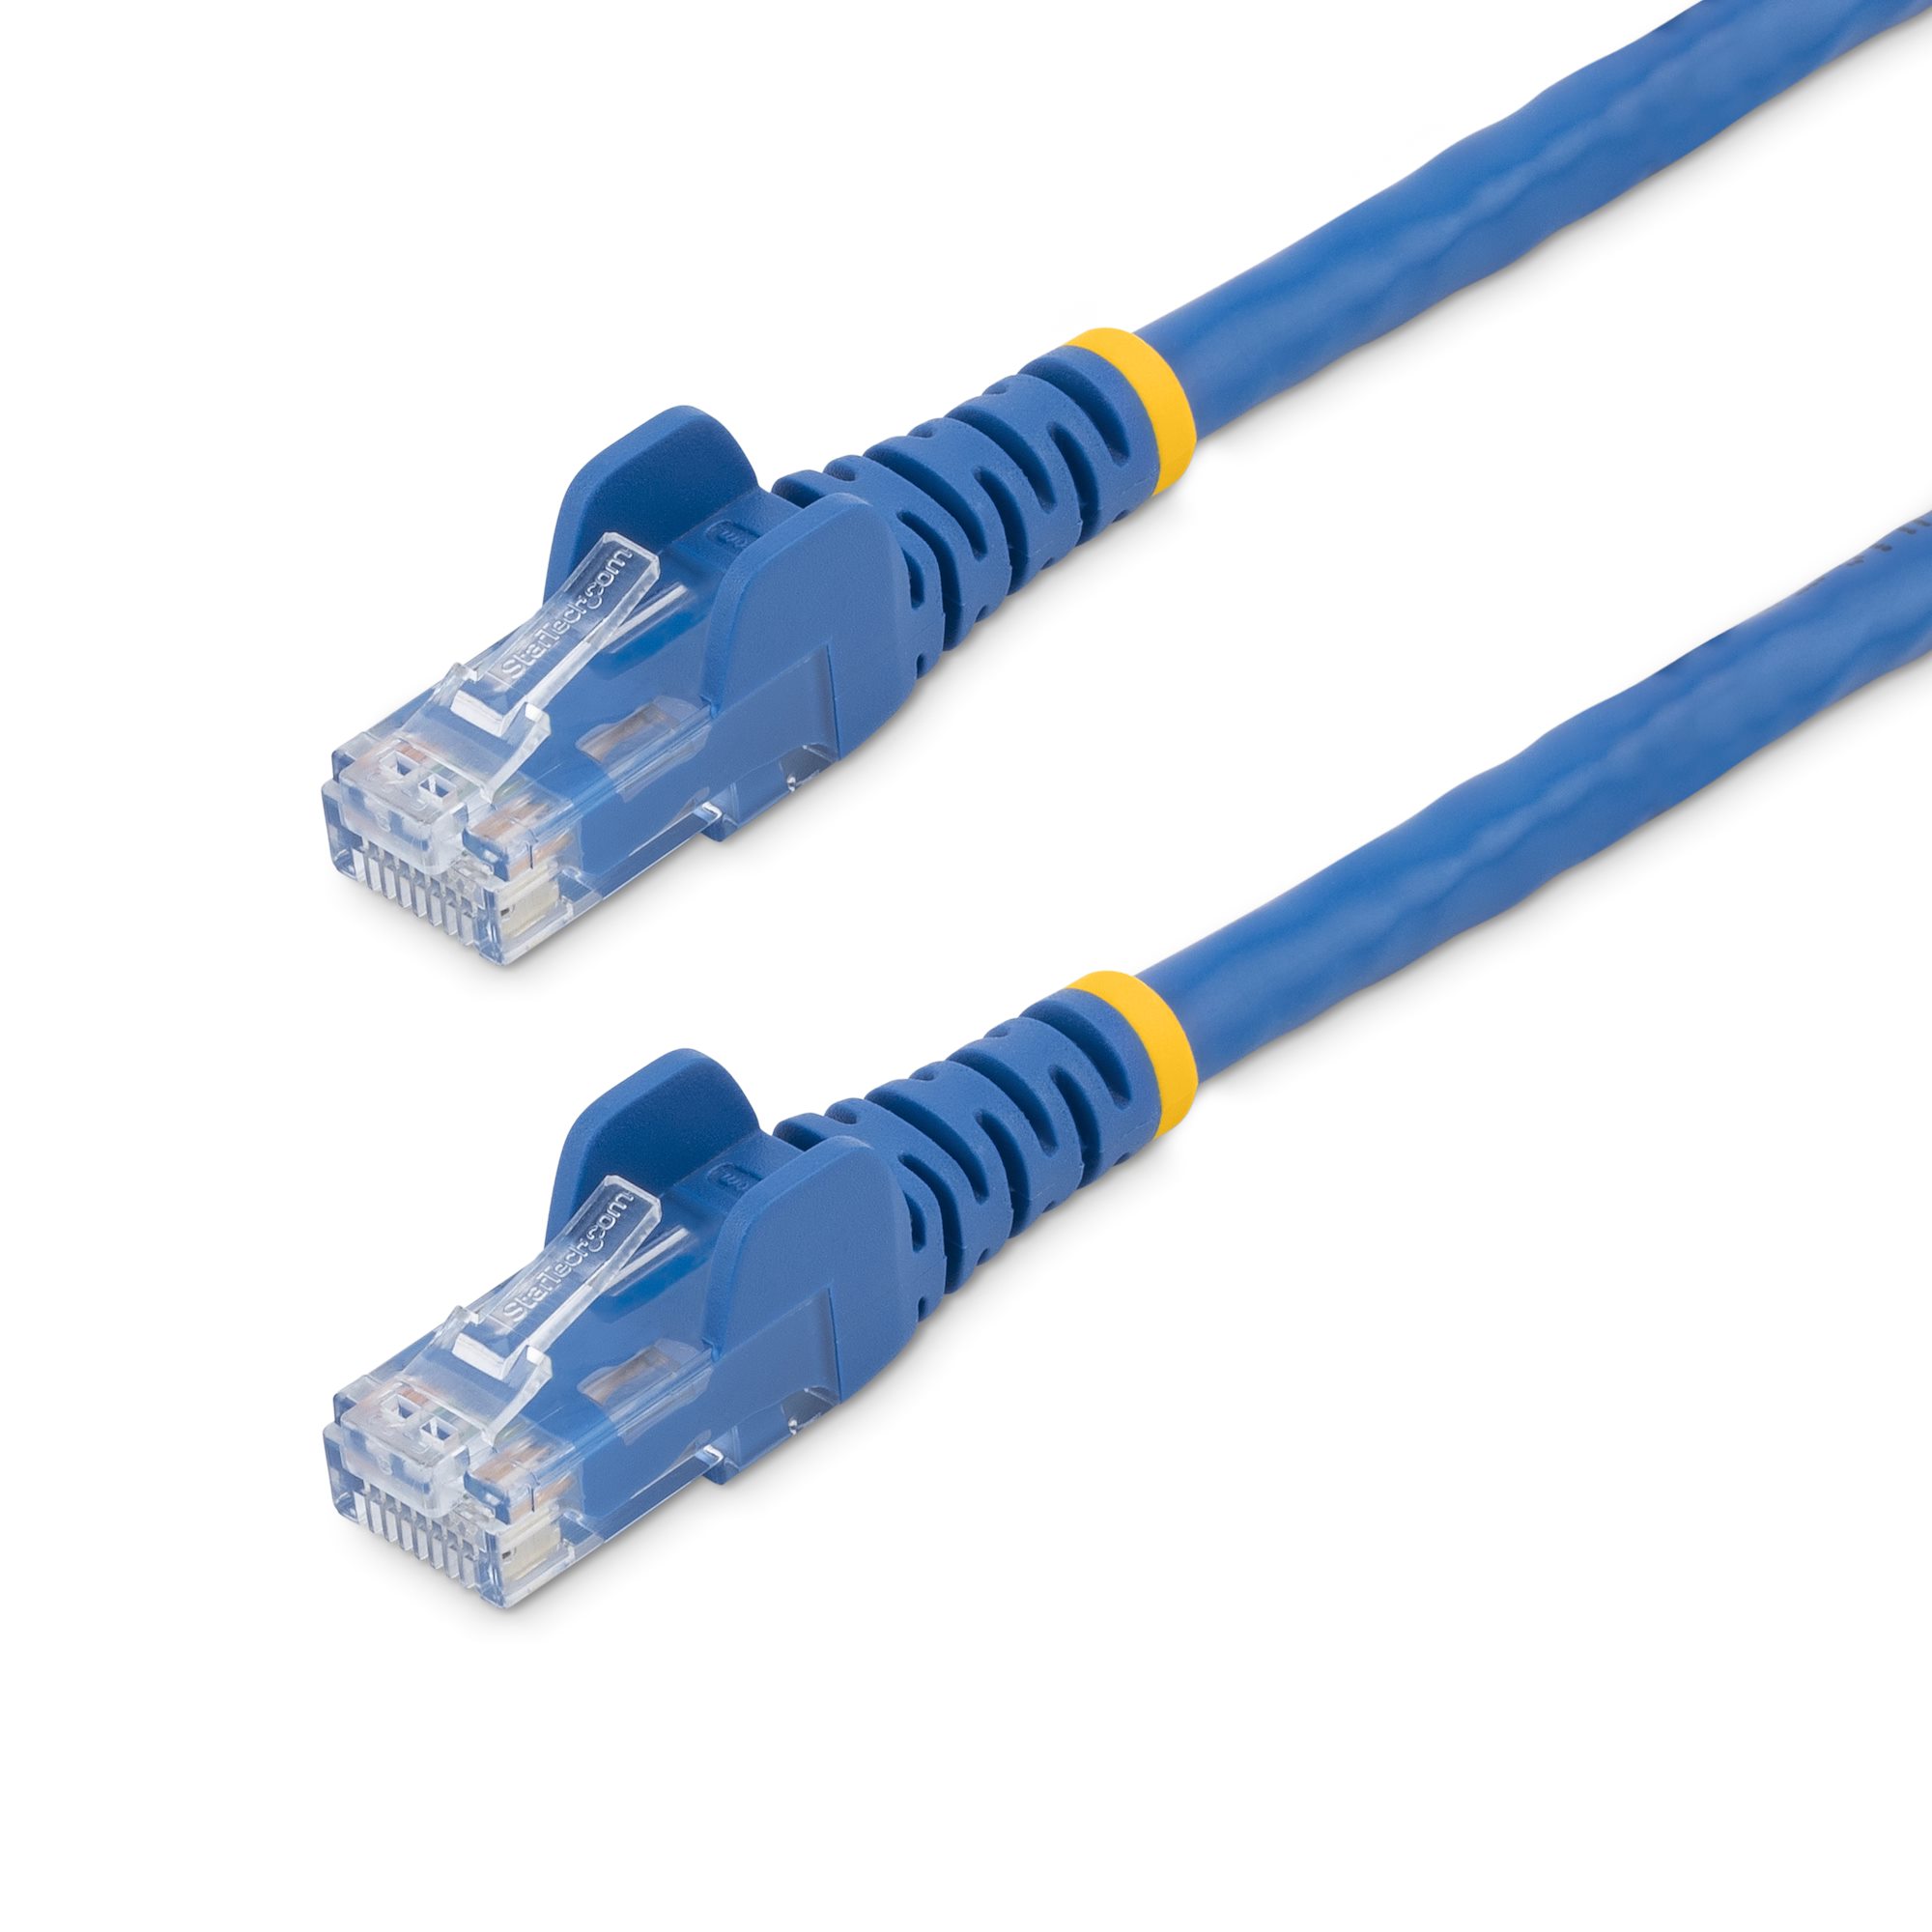 CAT6 Ethernet cable Blue 10 Pack 7ft ETL - Cat 6 Multipack Cables, Cables